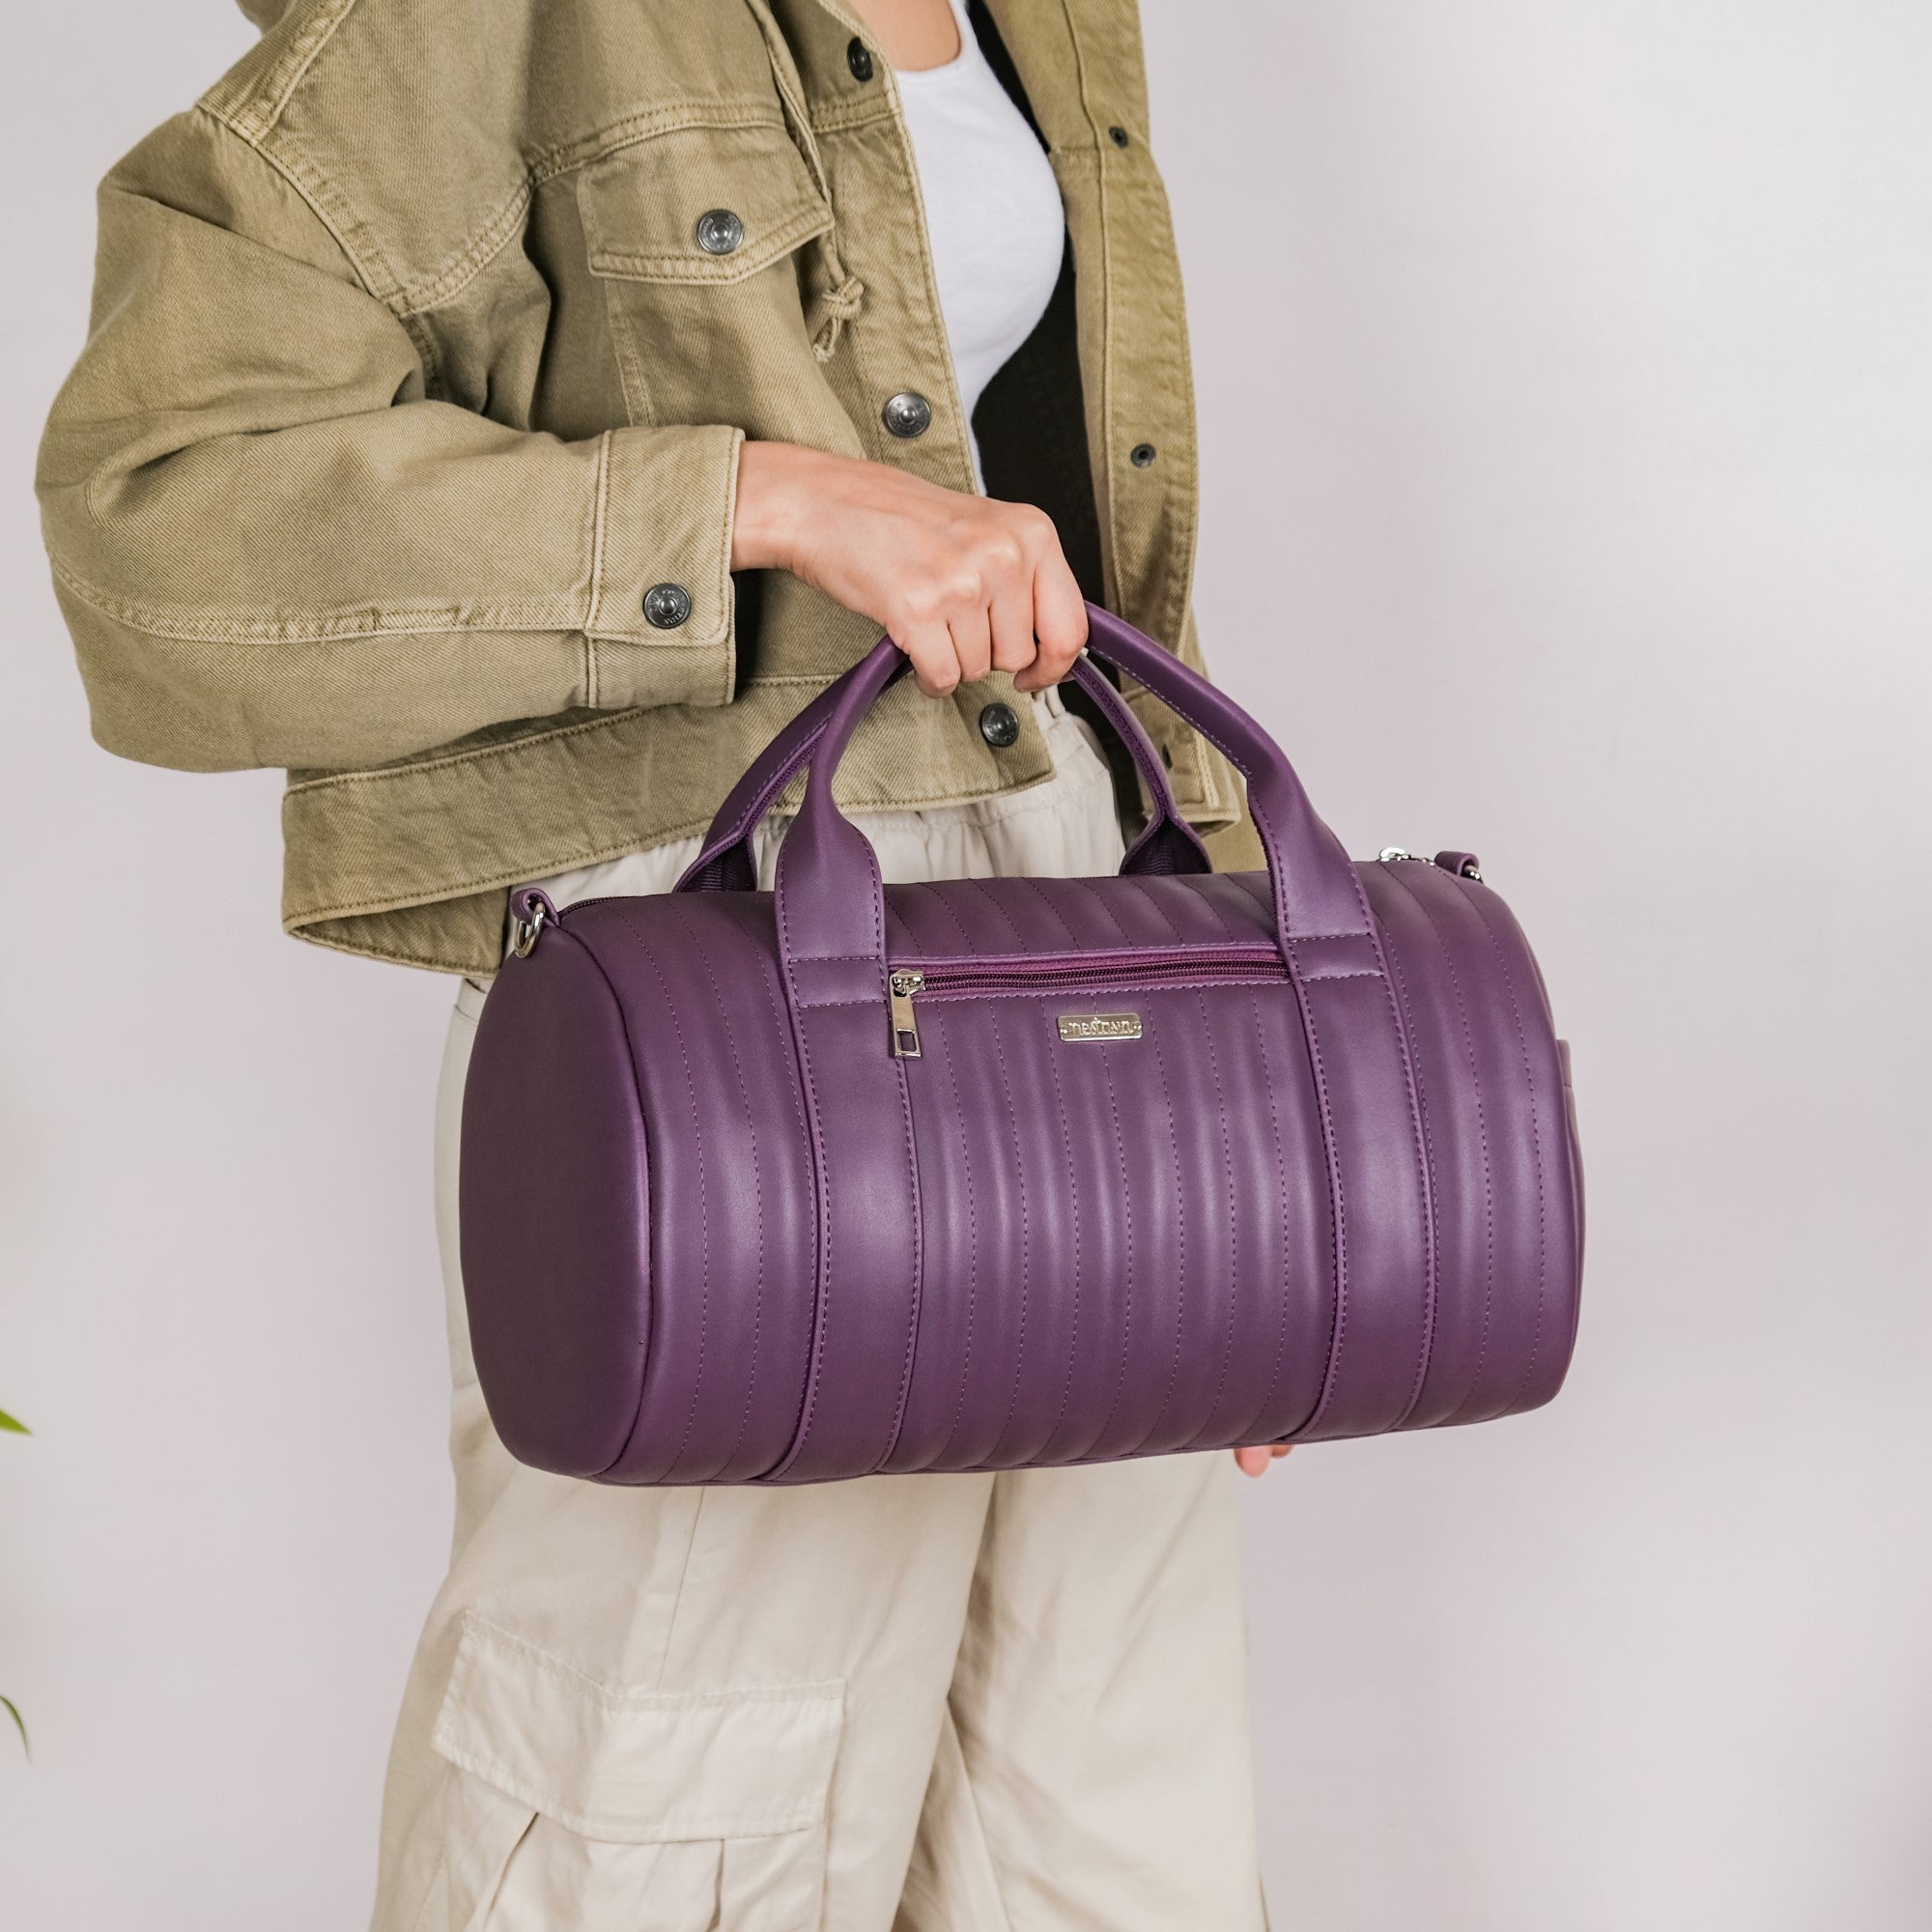 Buy Duffle Bags for Men Online in India